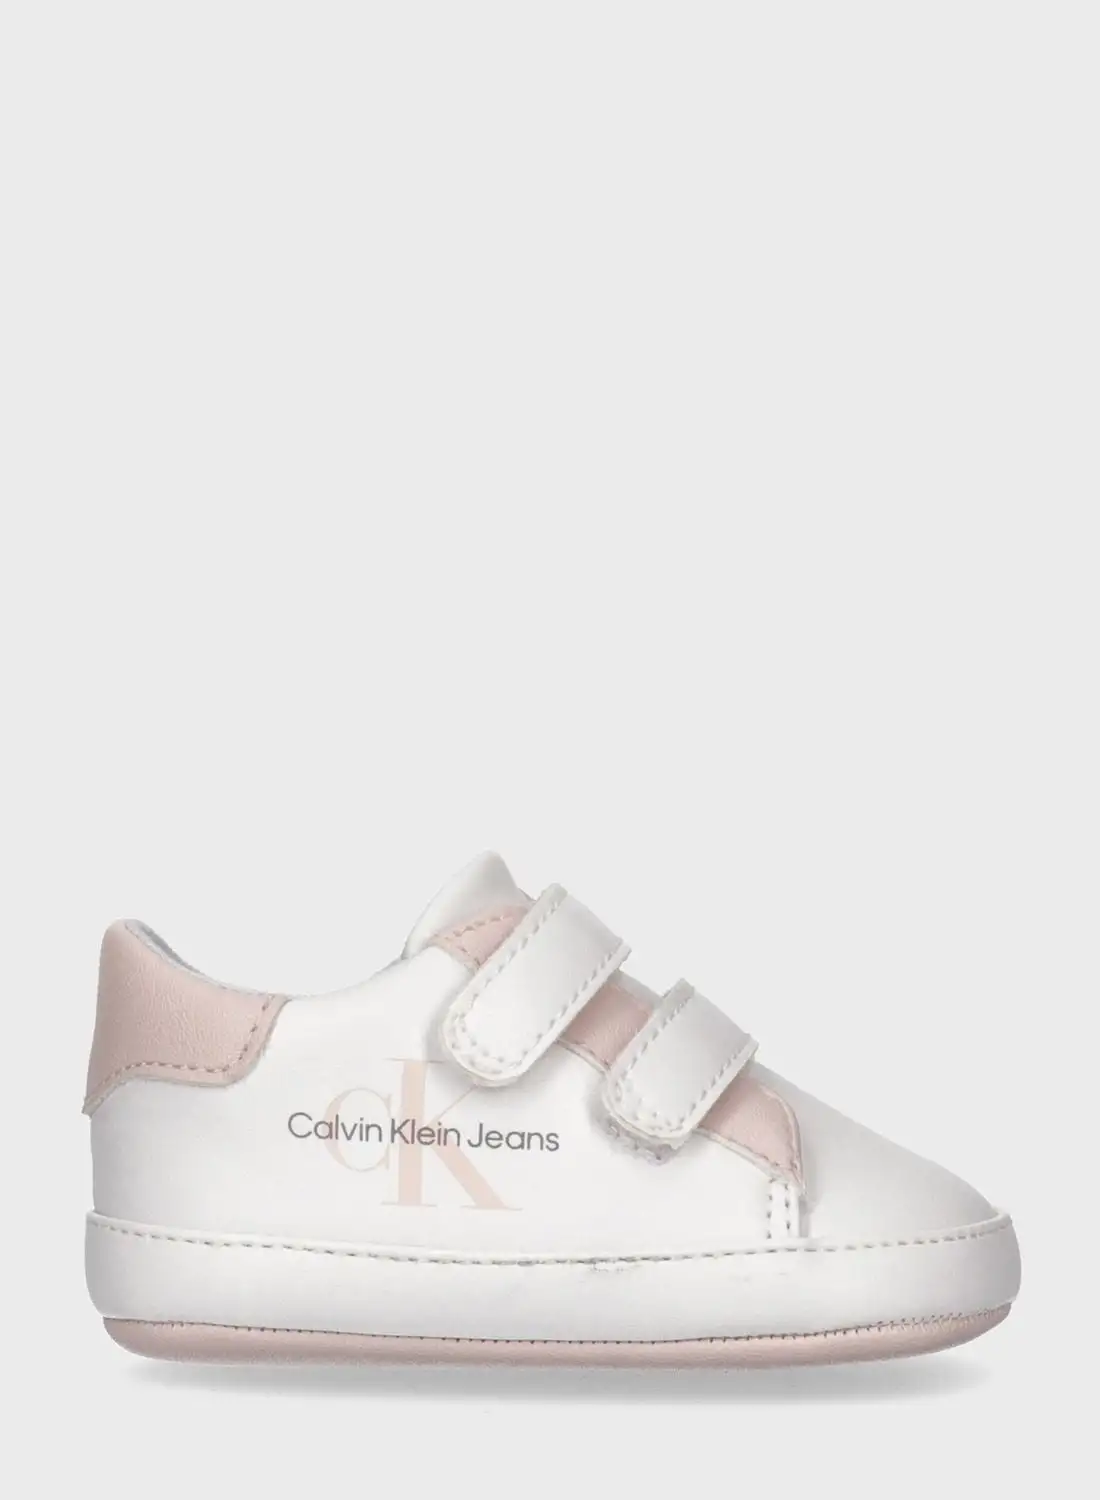 Calvin Klein Jeans Infant Low Top Velcro Sneakers